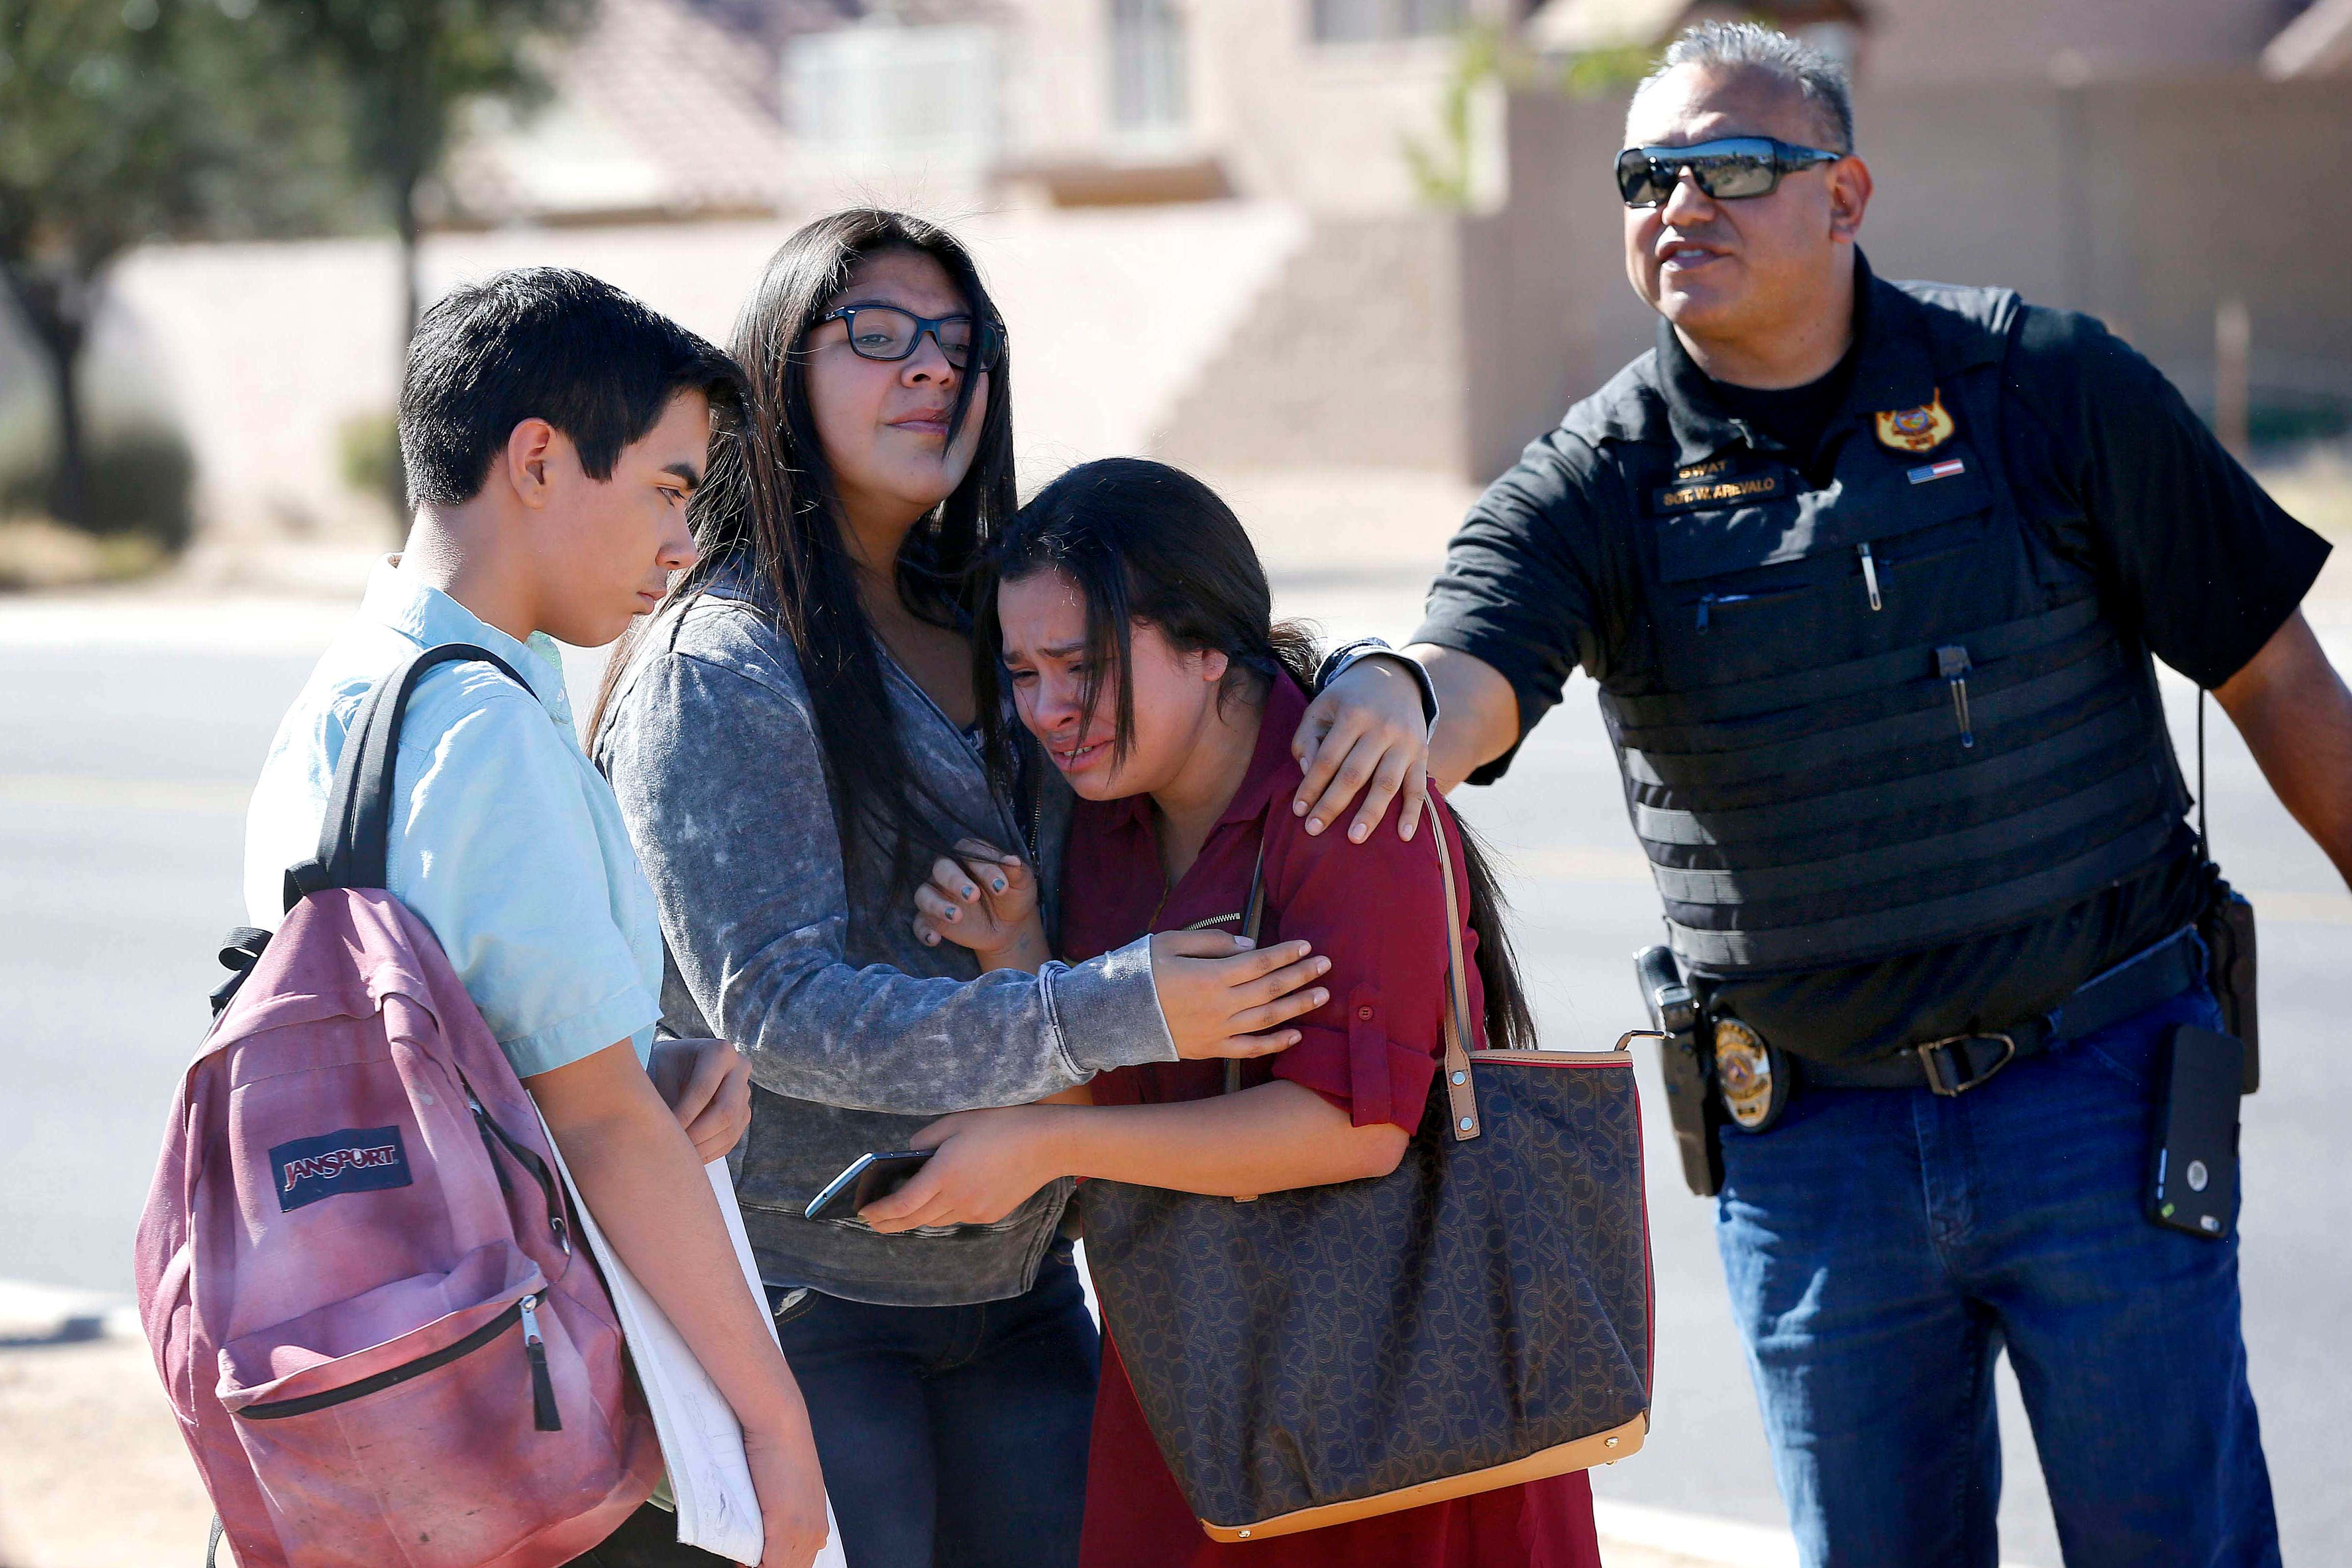 Classmate provided handgun used in murdersuicide at Arizona high